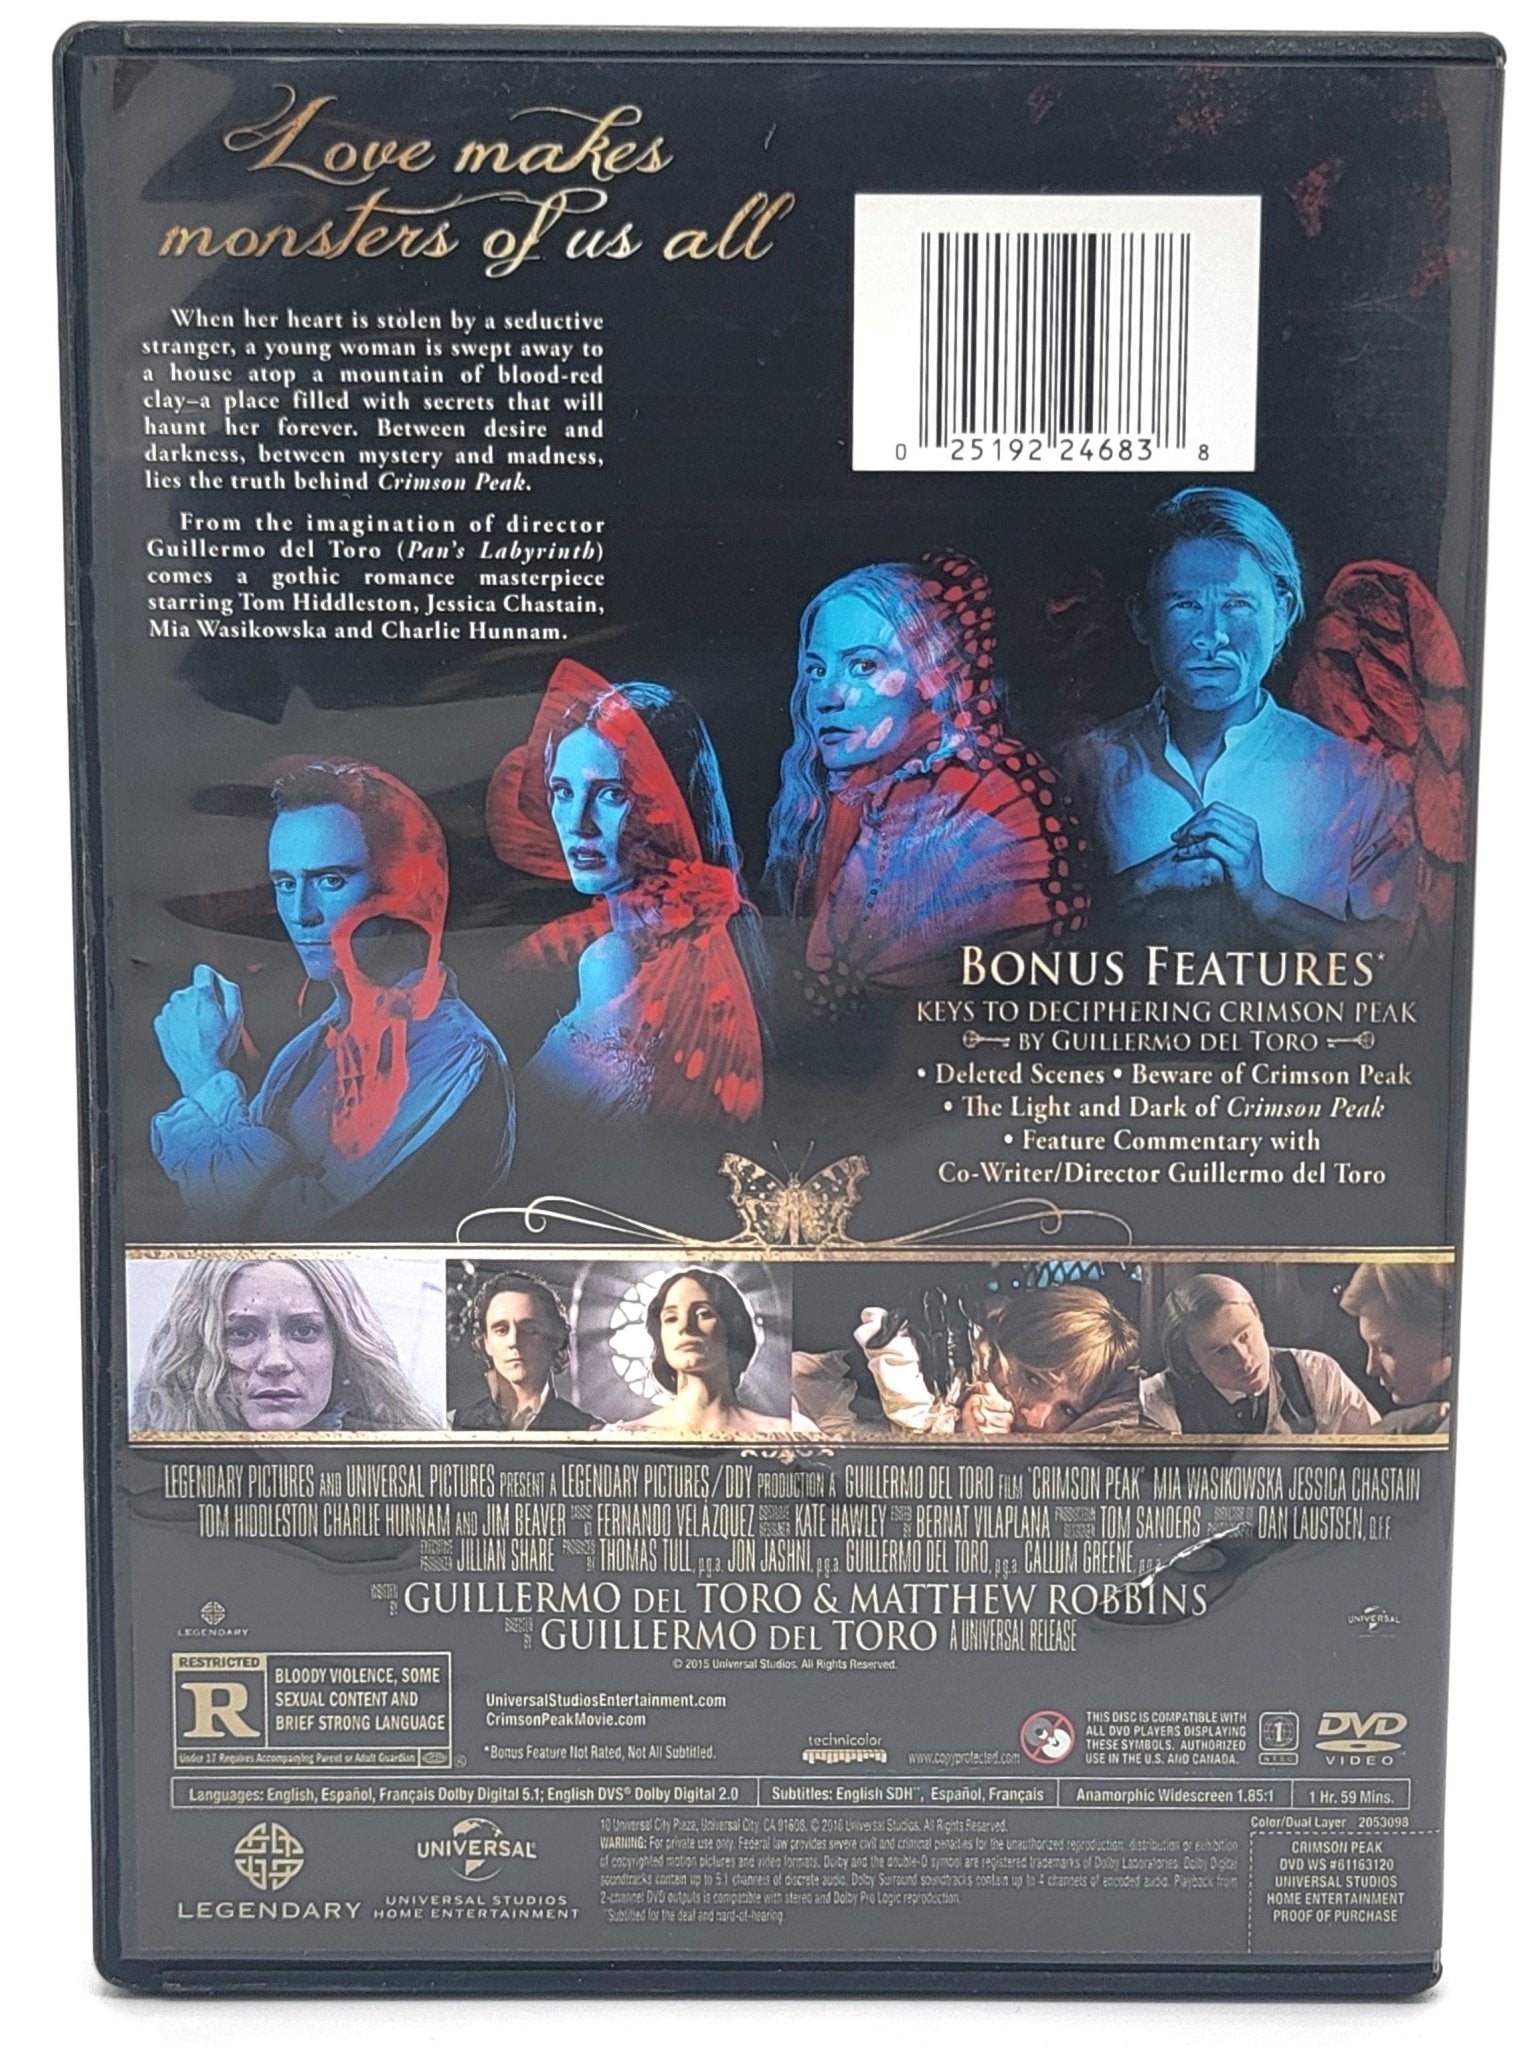 Universal Studios Home Entertainment - Crimson Peak | DVD | Widescreen - DVD - Steady Bunny Shop